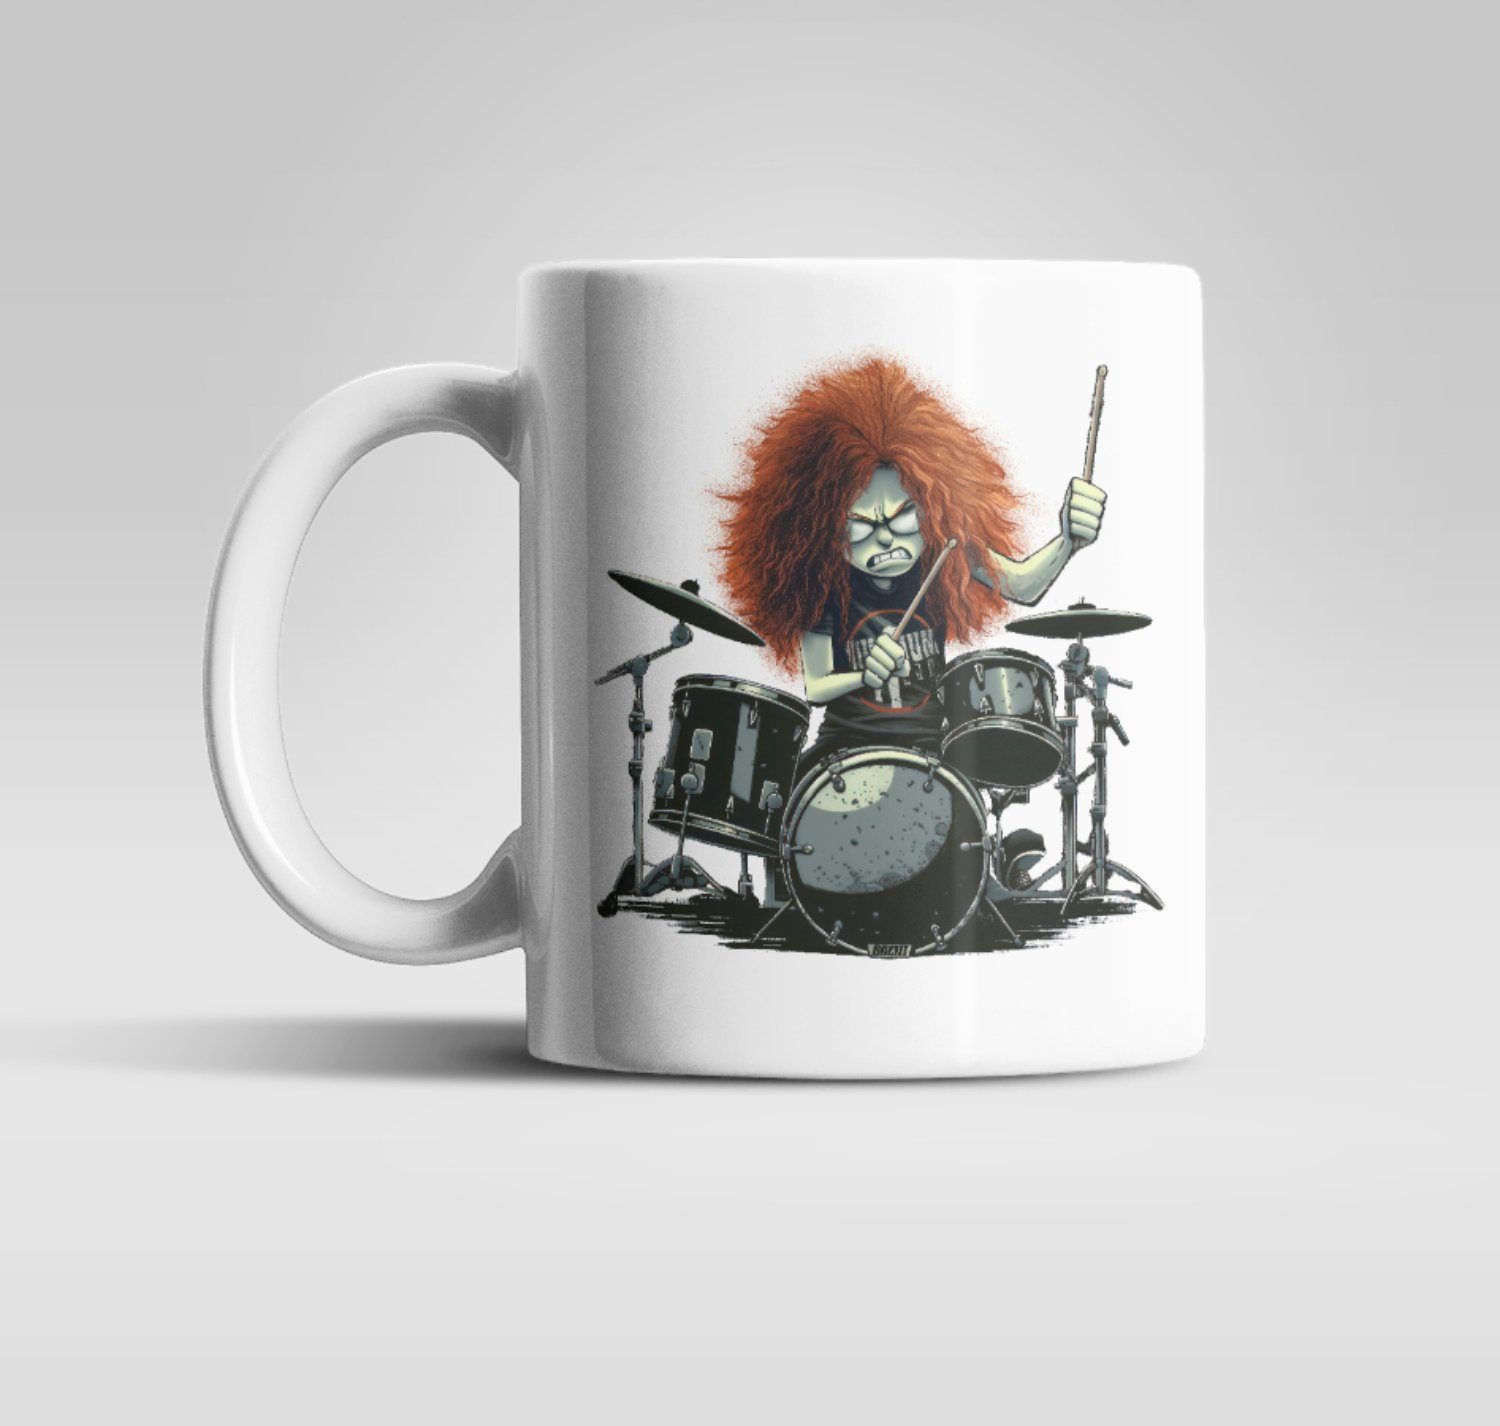 WS-Trend Tasse Crazy Metal Drummer Kaffeetasse Teetasse, Keramik, 330 ml